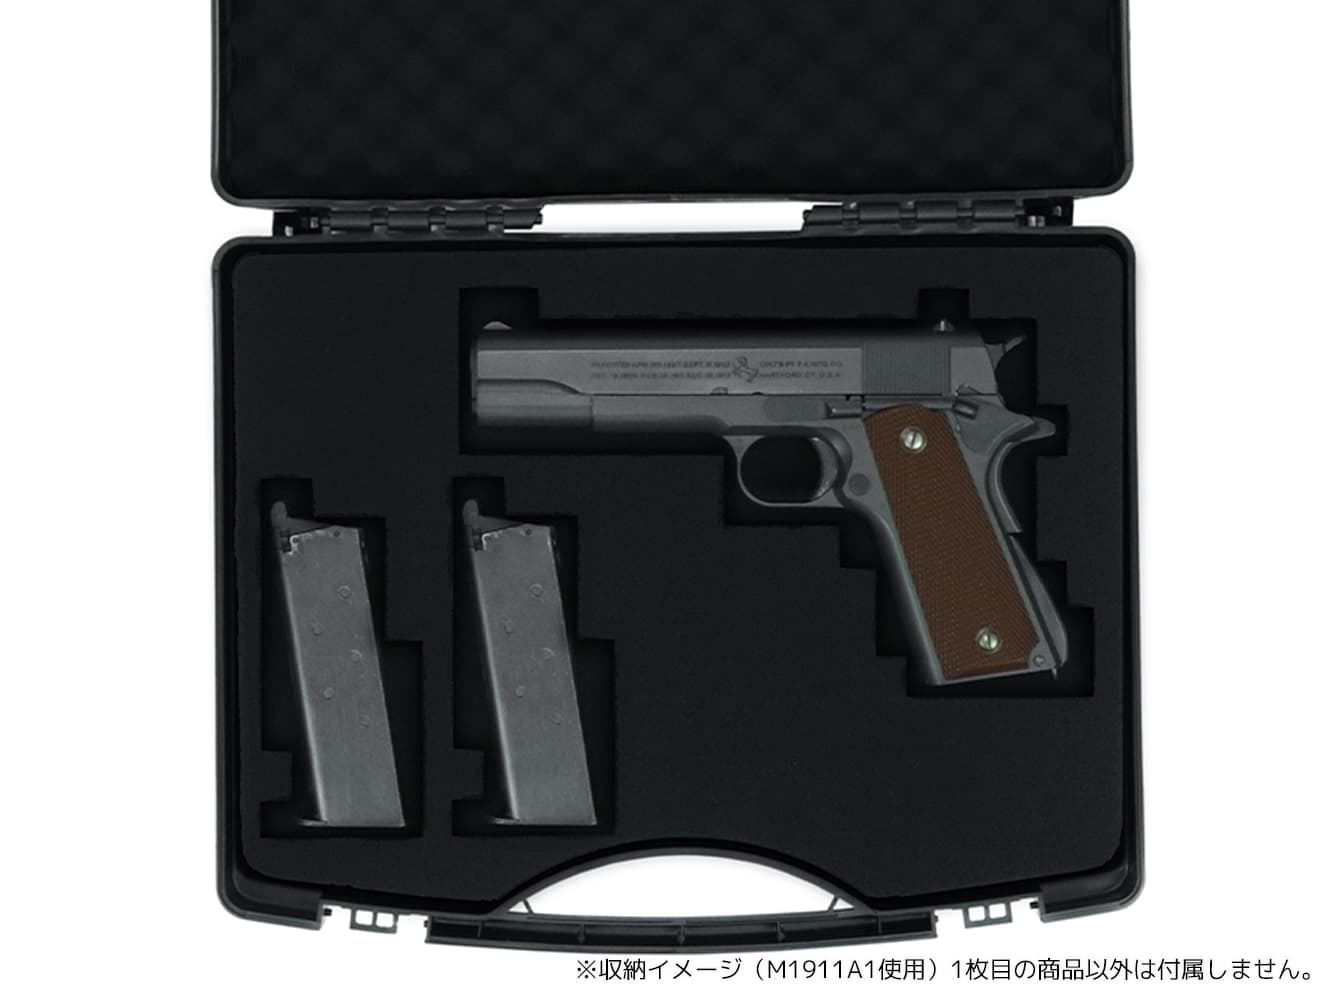 H8026B5L MILITARY-BASE light weight hard gun case 5.4L 33.3cm×22.2cm×7.5cm